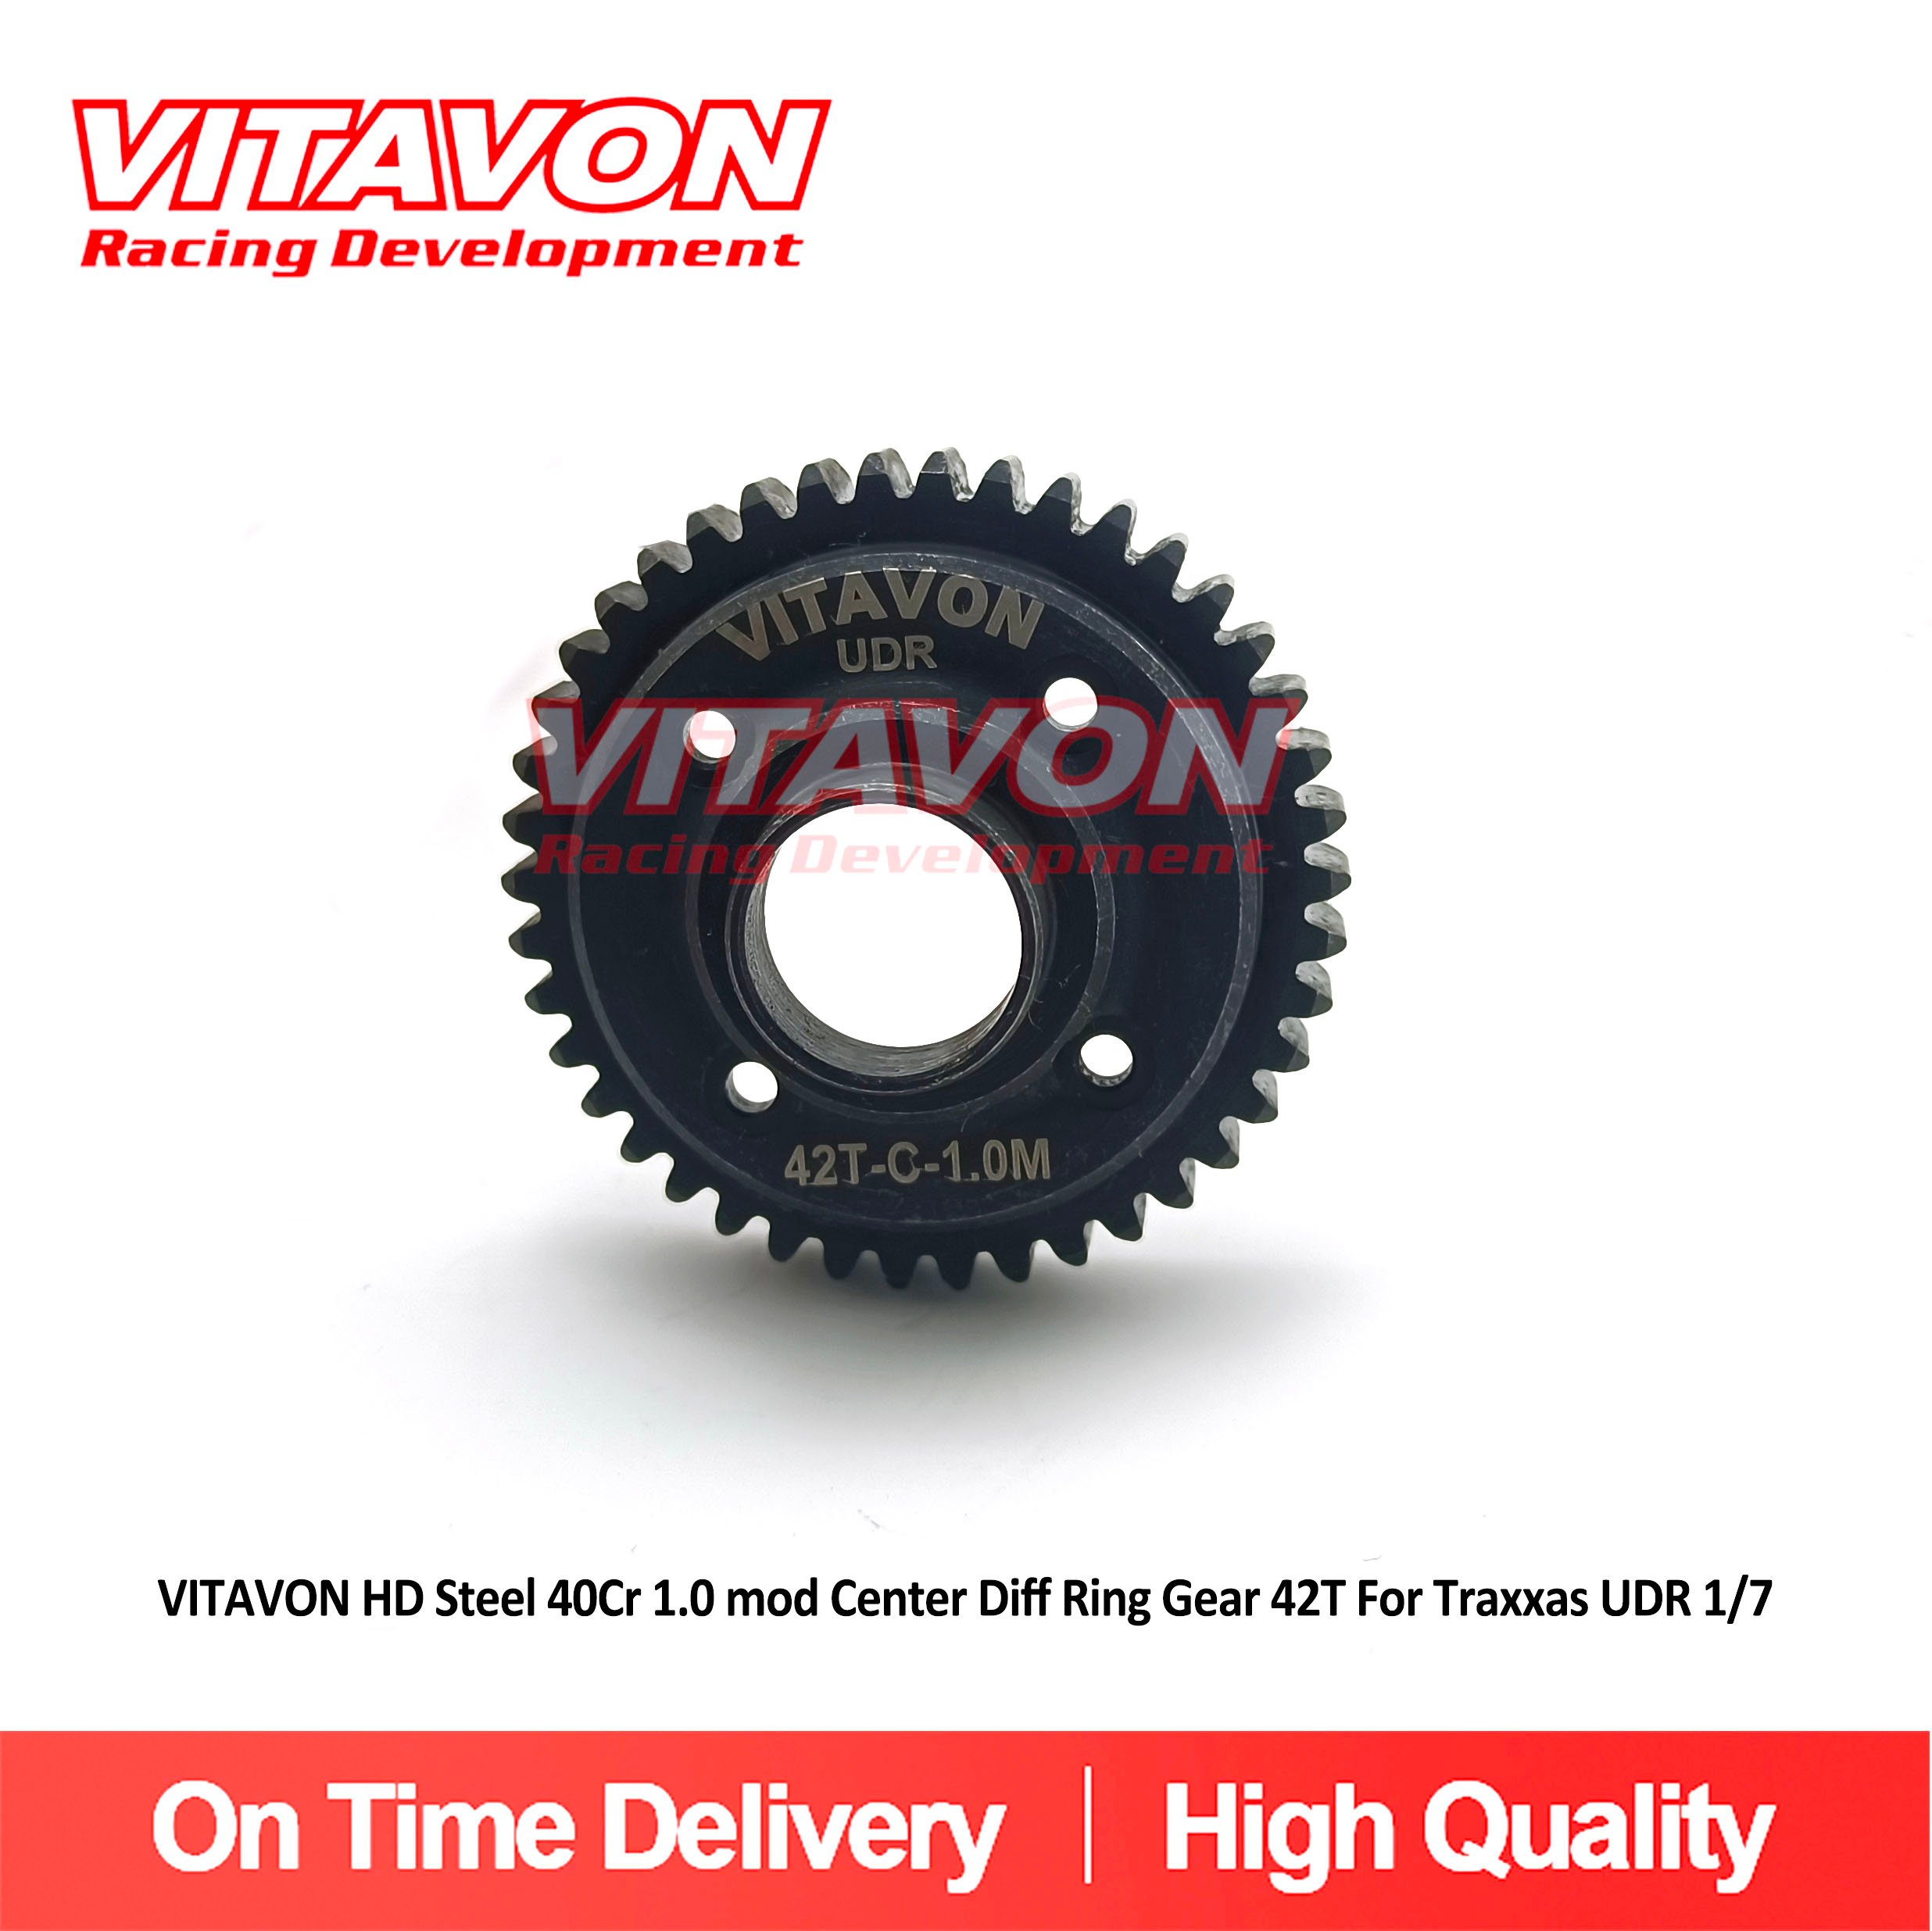 VITAVON HD Steel 40Cr 1.0 Mod Center Diff Ring Gear 42T For Traxxas UDR 1/7